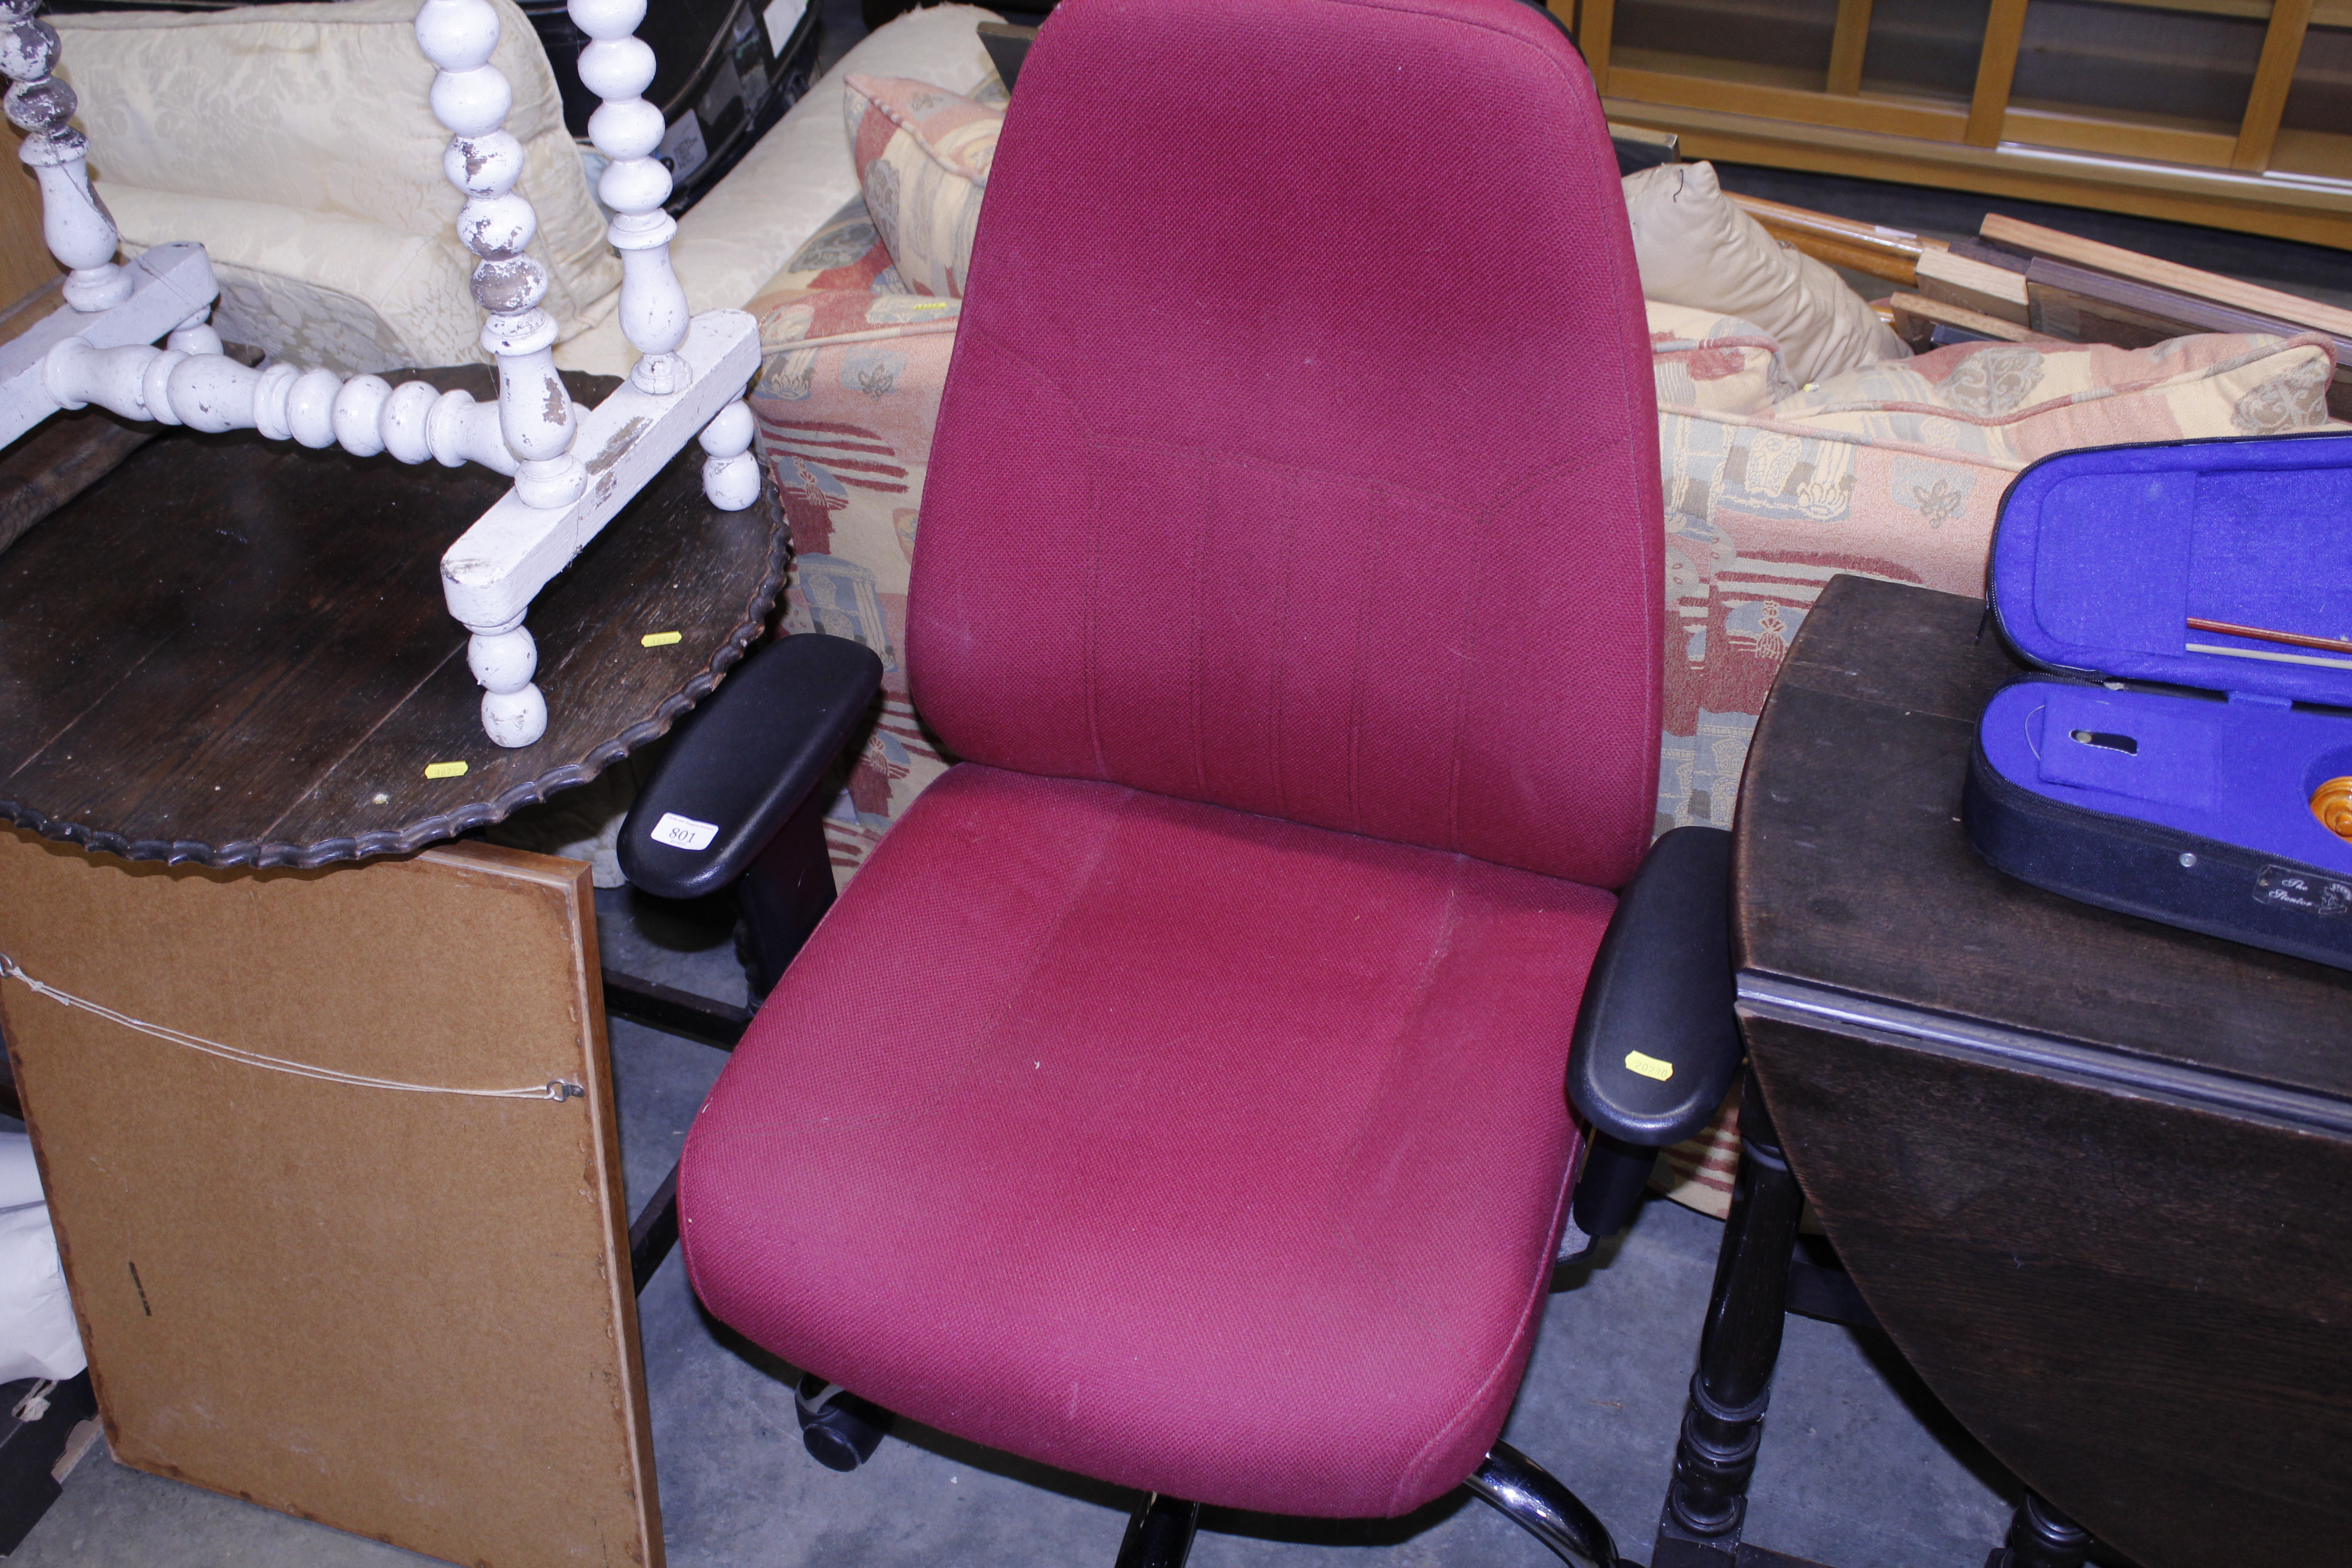 A revolving office desk chair